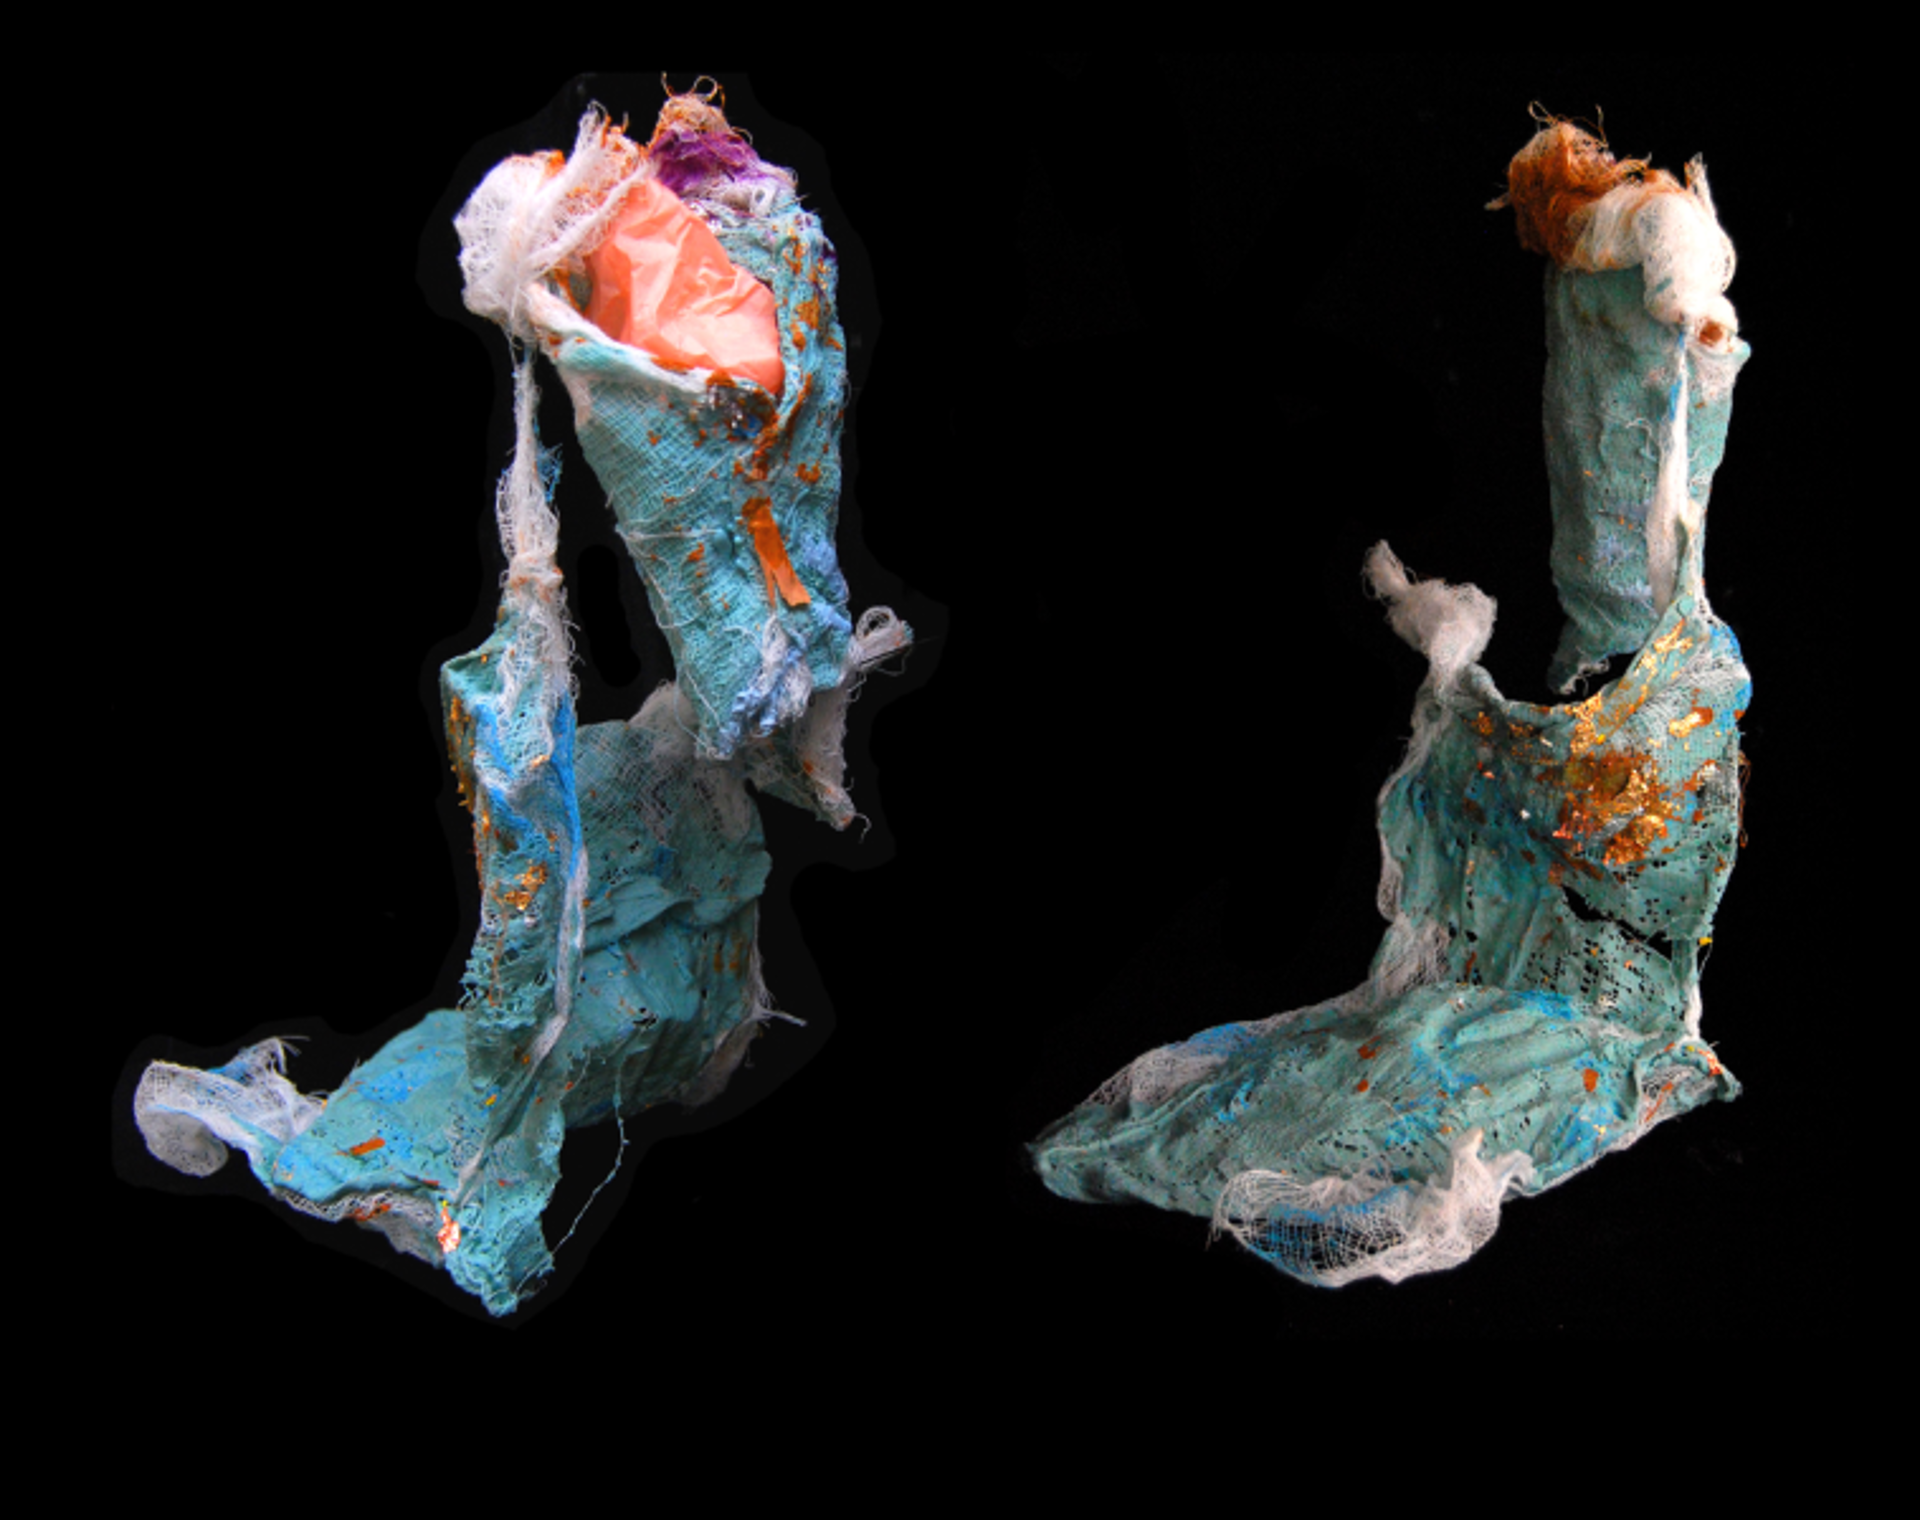 Sculpture Series, Found Materials by Gail Foster